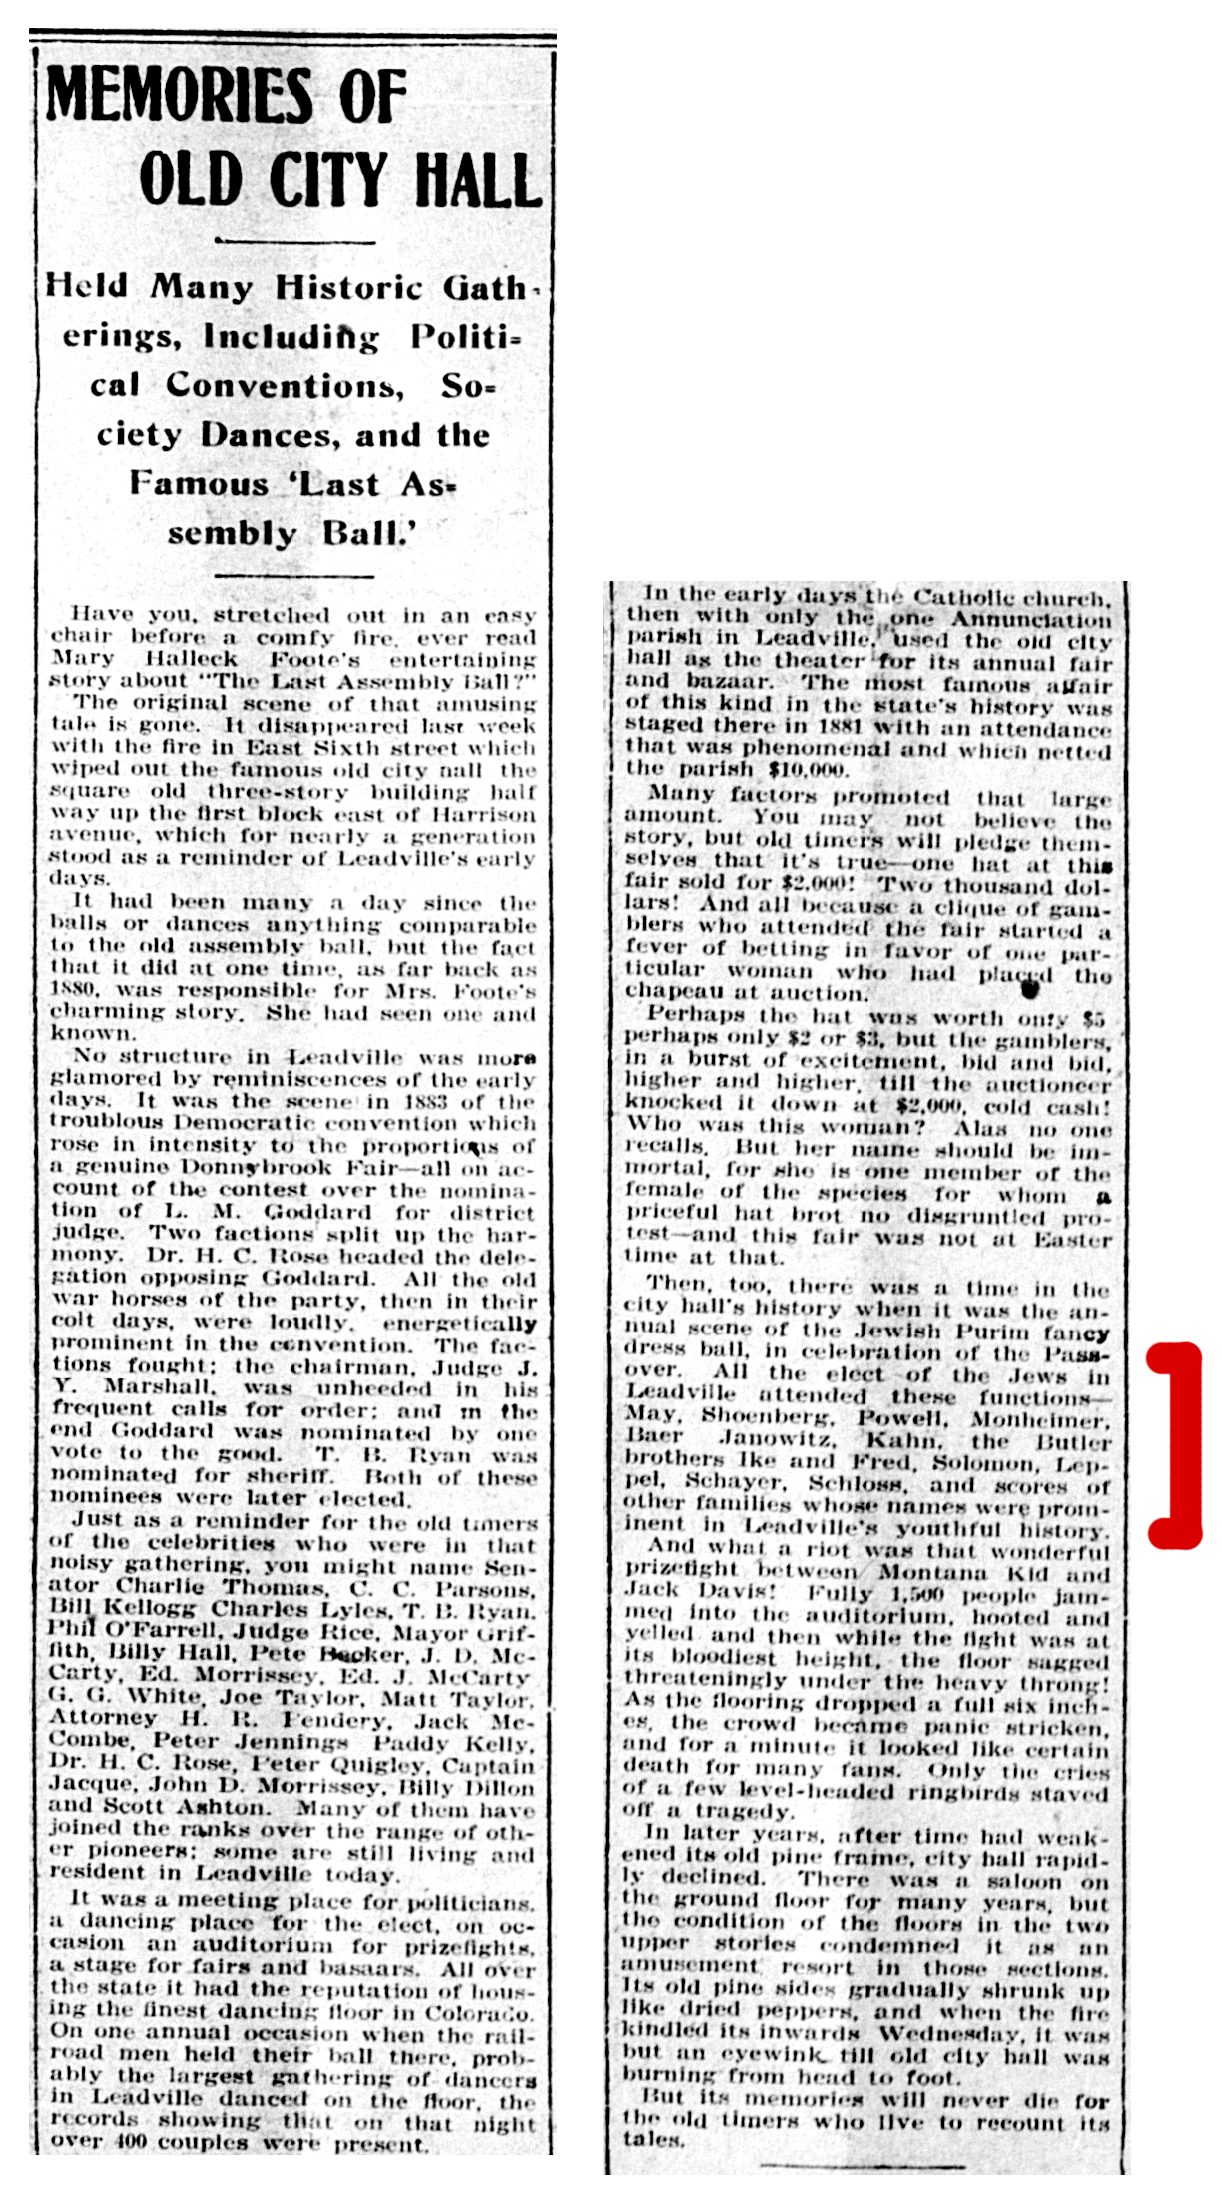 The Herald Democrat. Monday, April 3, 1916. Page 6.